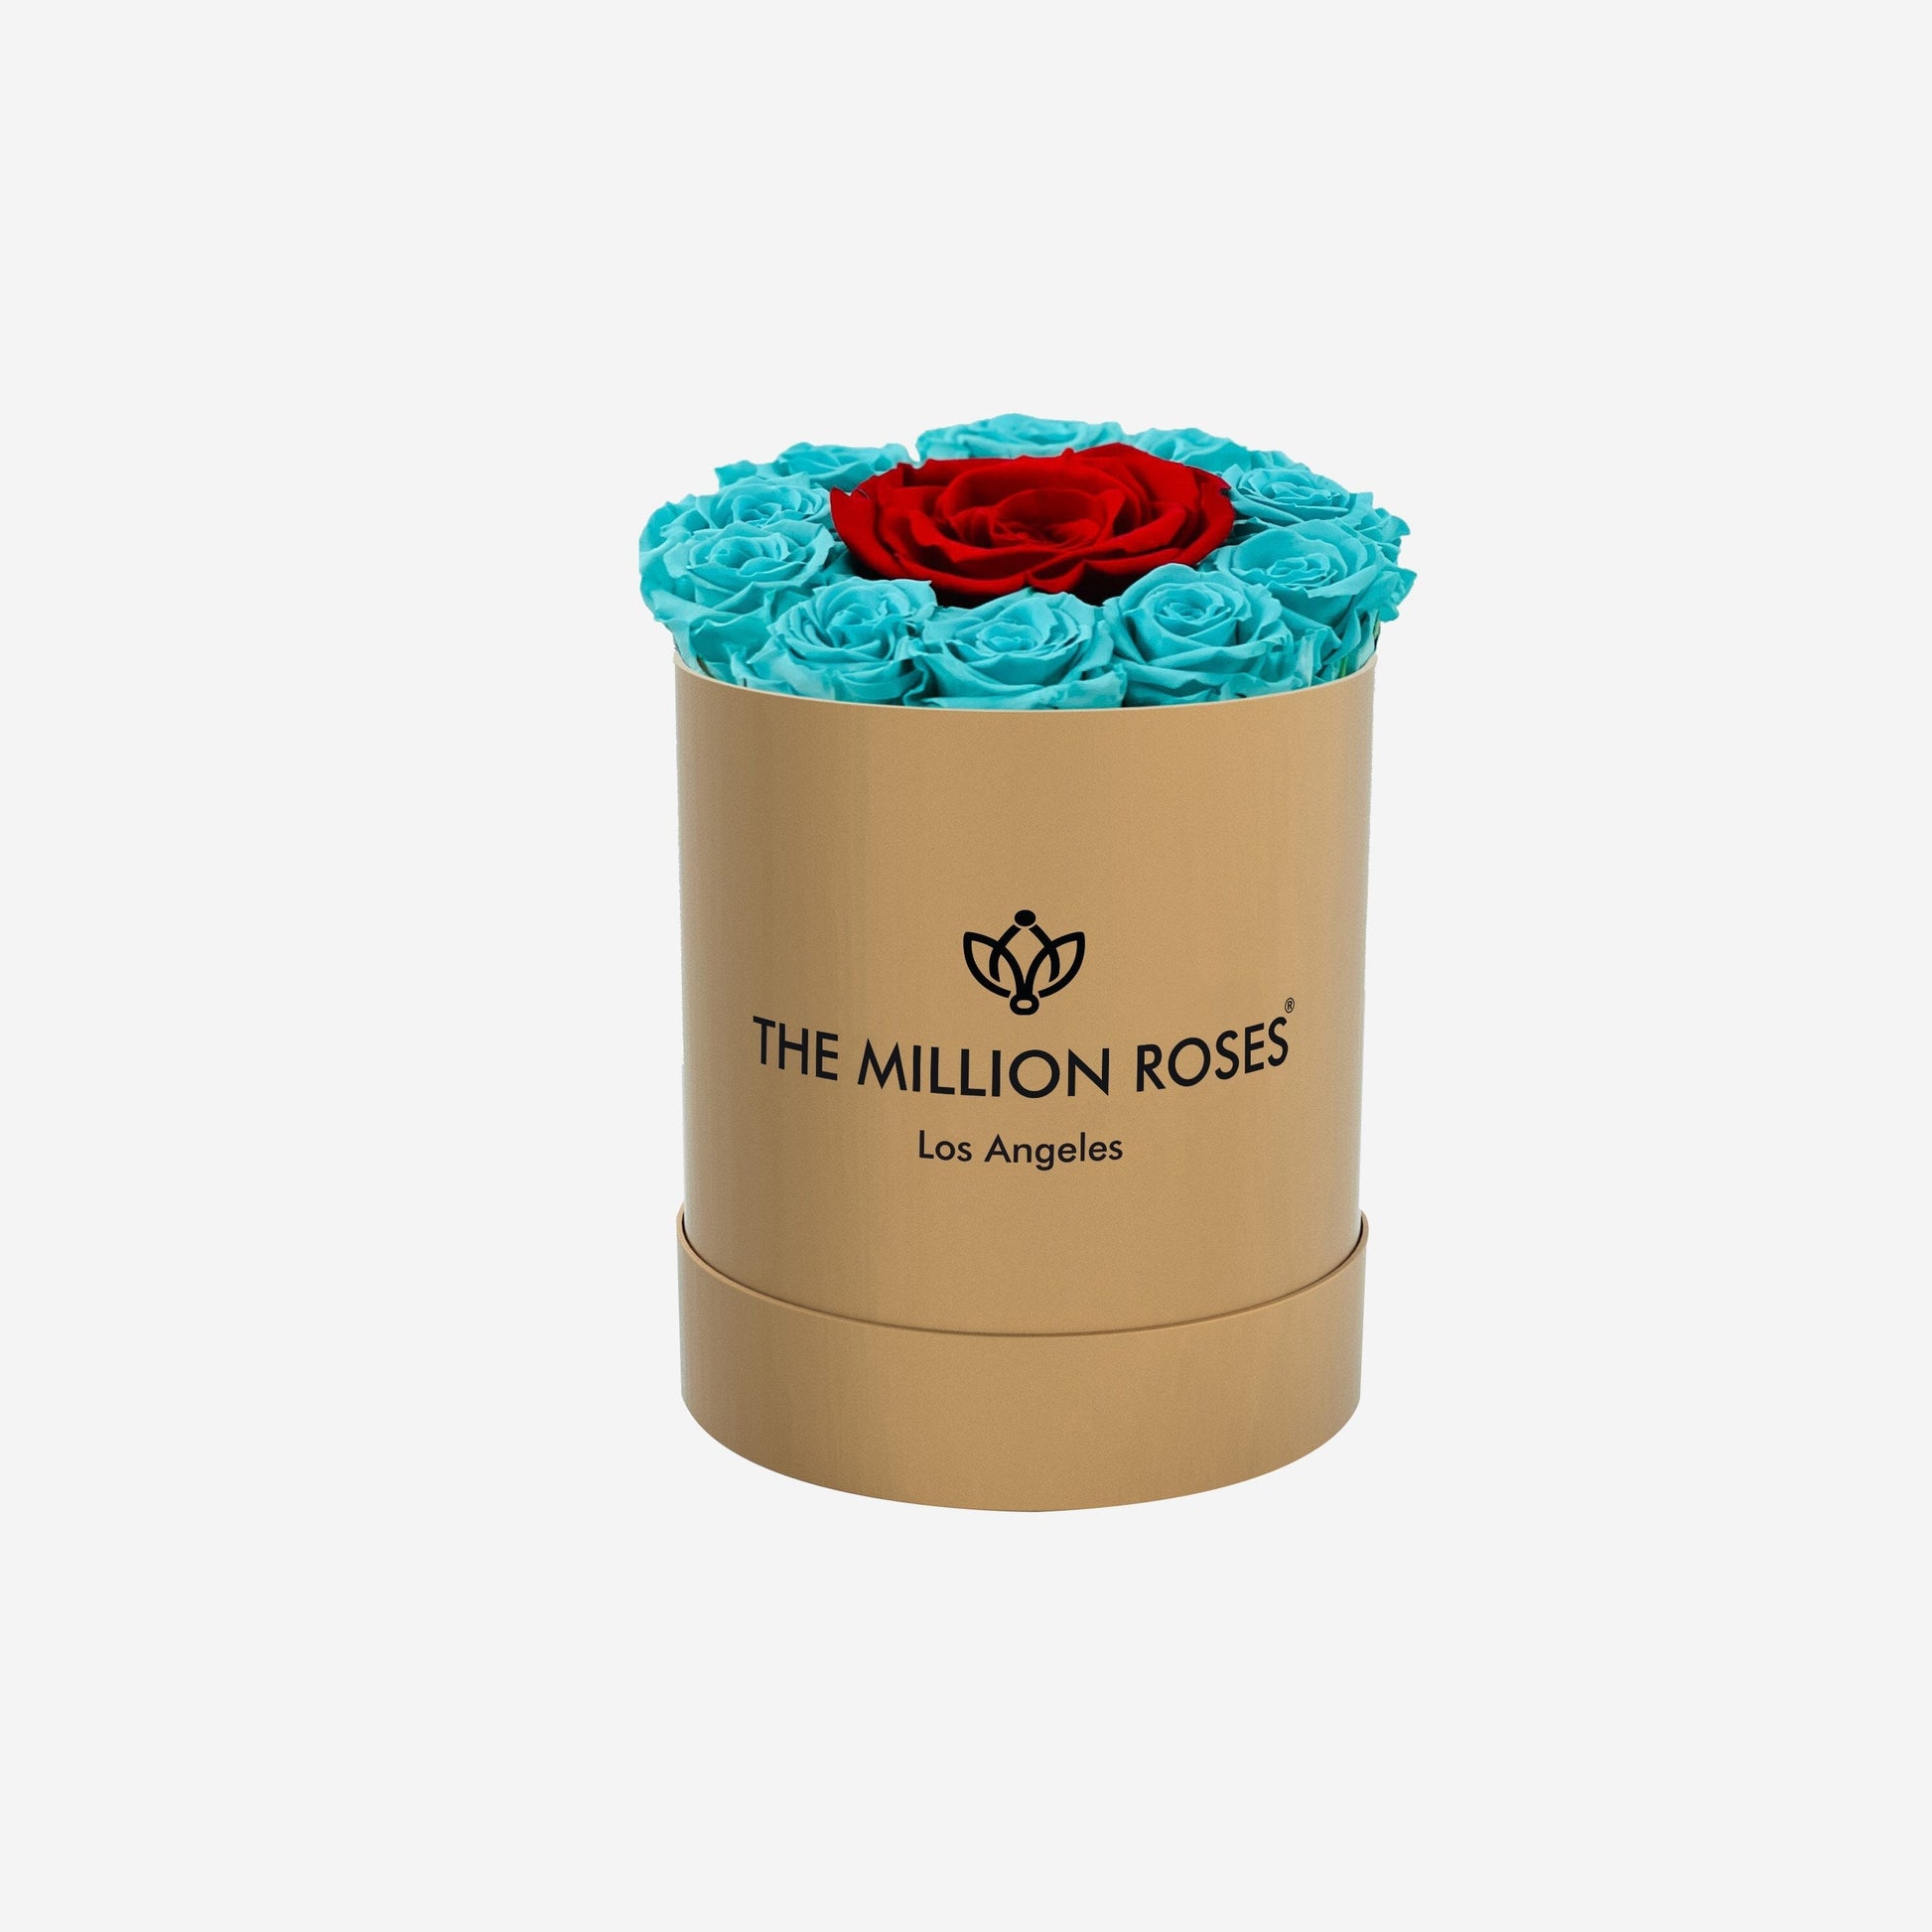 Basic Gold Box | Turquoise & Red Mini Roses - The Million Roses